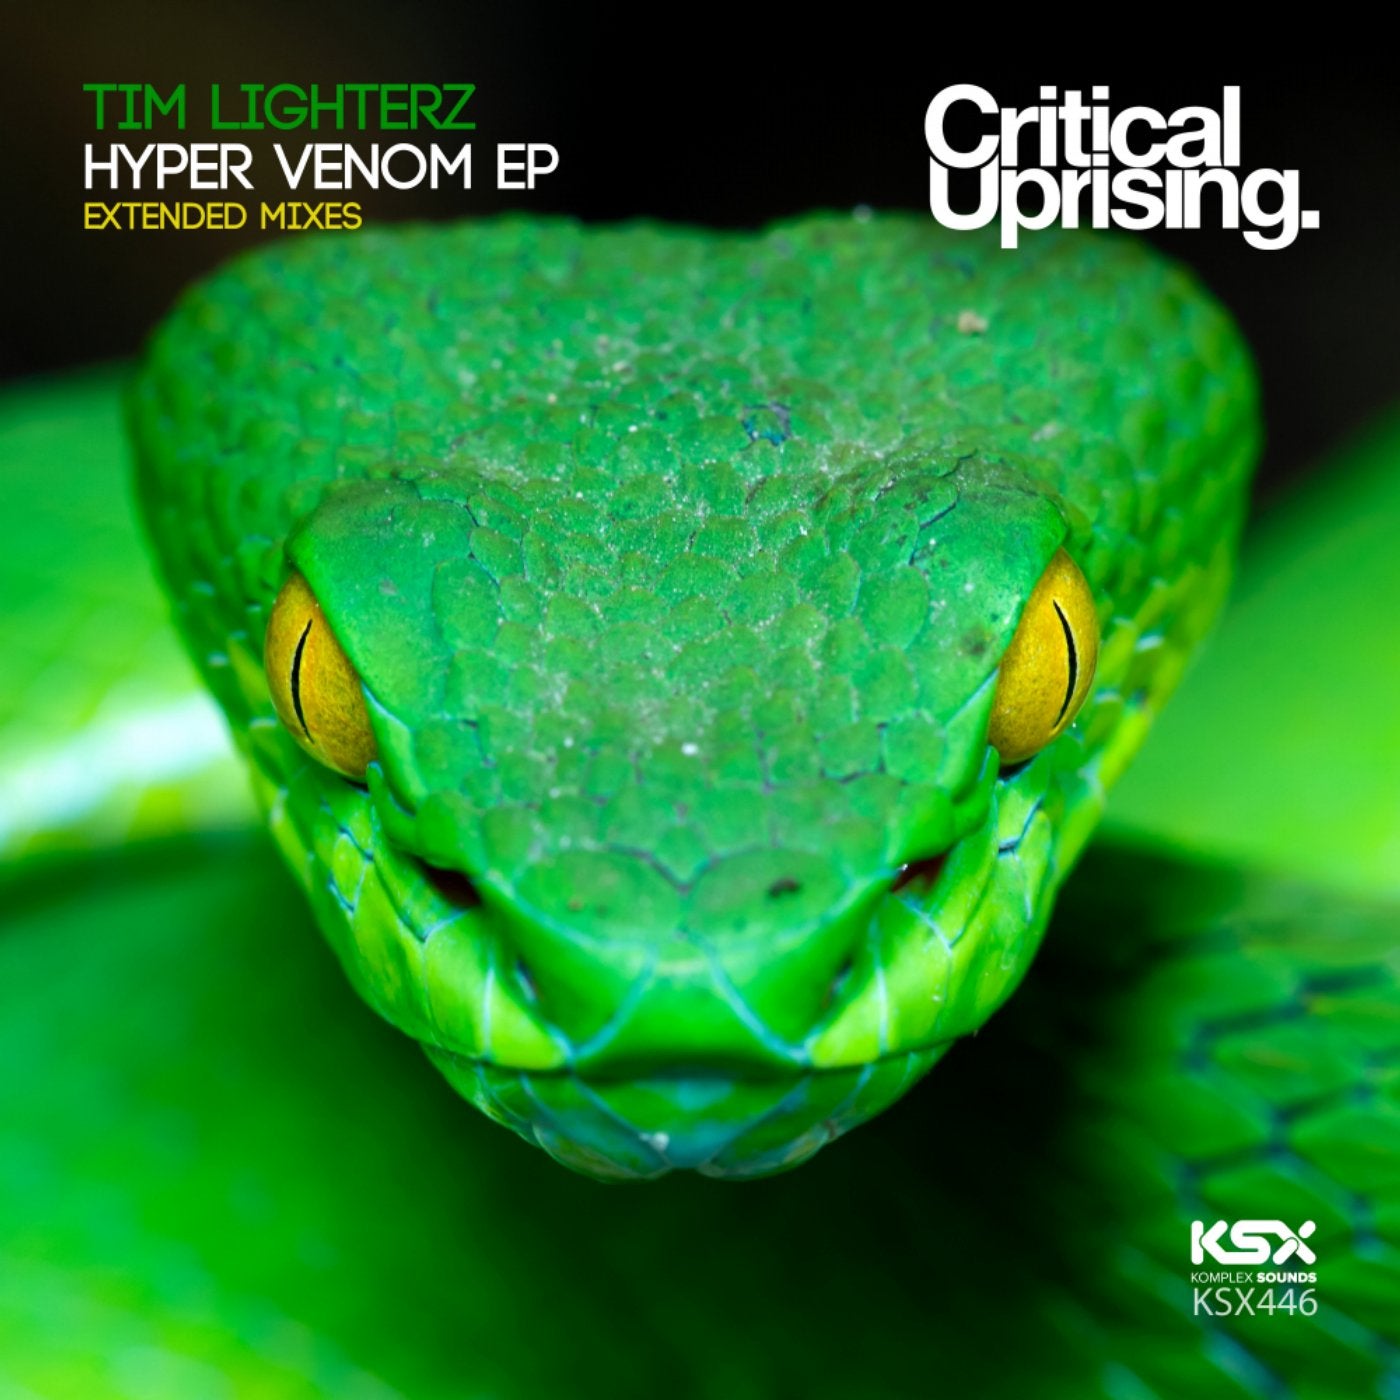 Hyper Venom EP